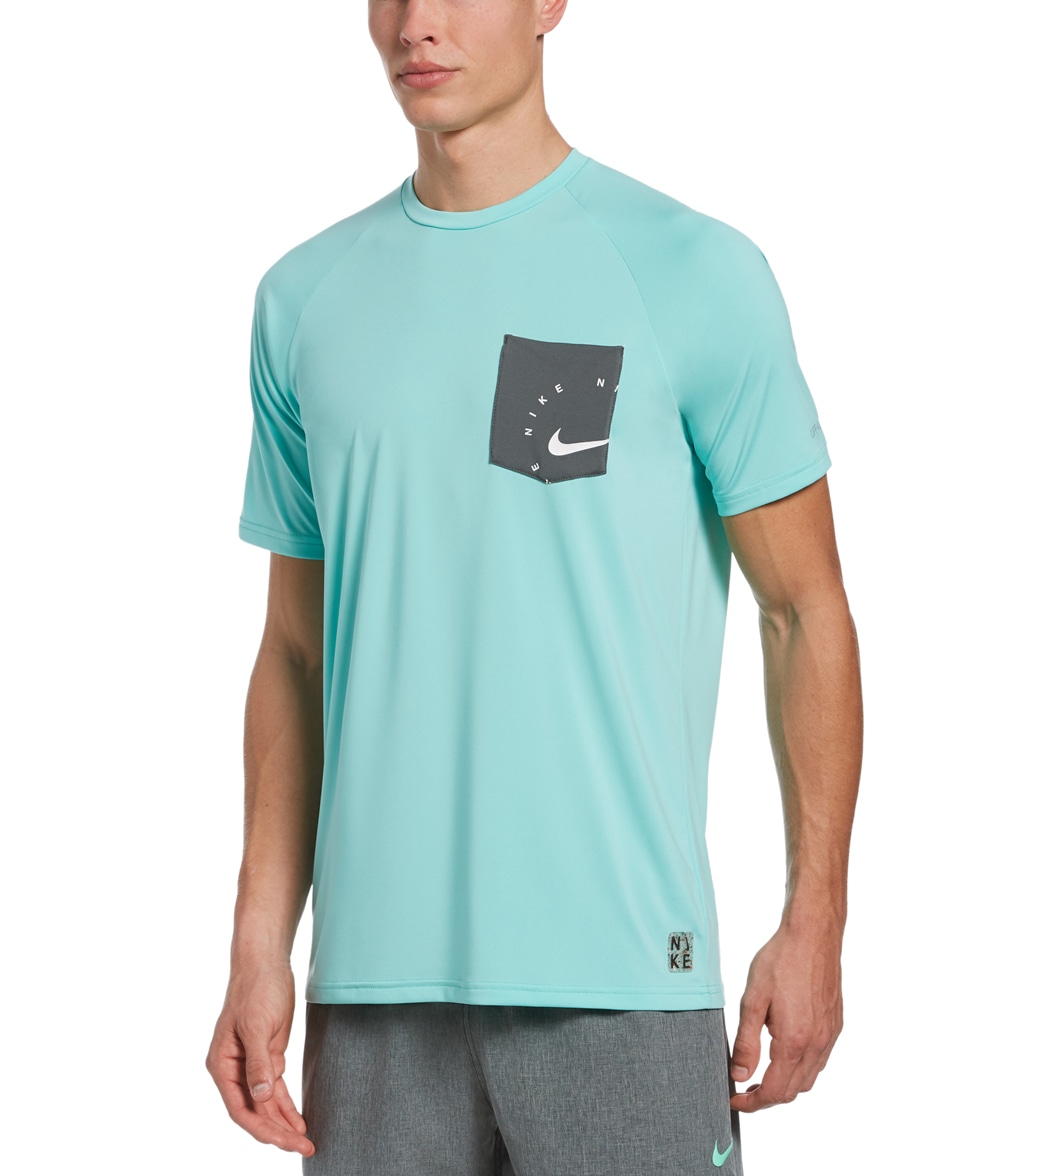 Nike Men's Logo Short Sleeve Hydro Rashguard Shirt - Tropical Twist Medium - Swimoutlet.com